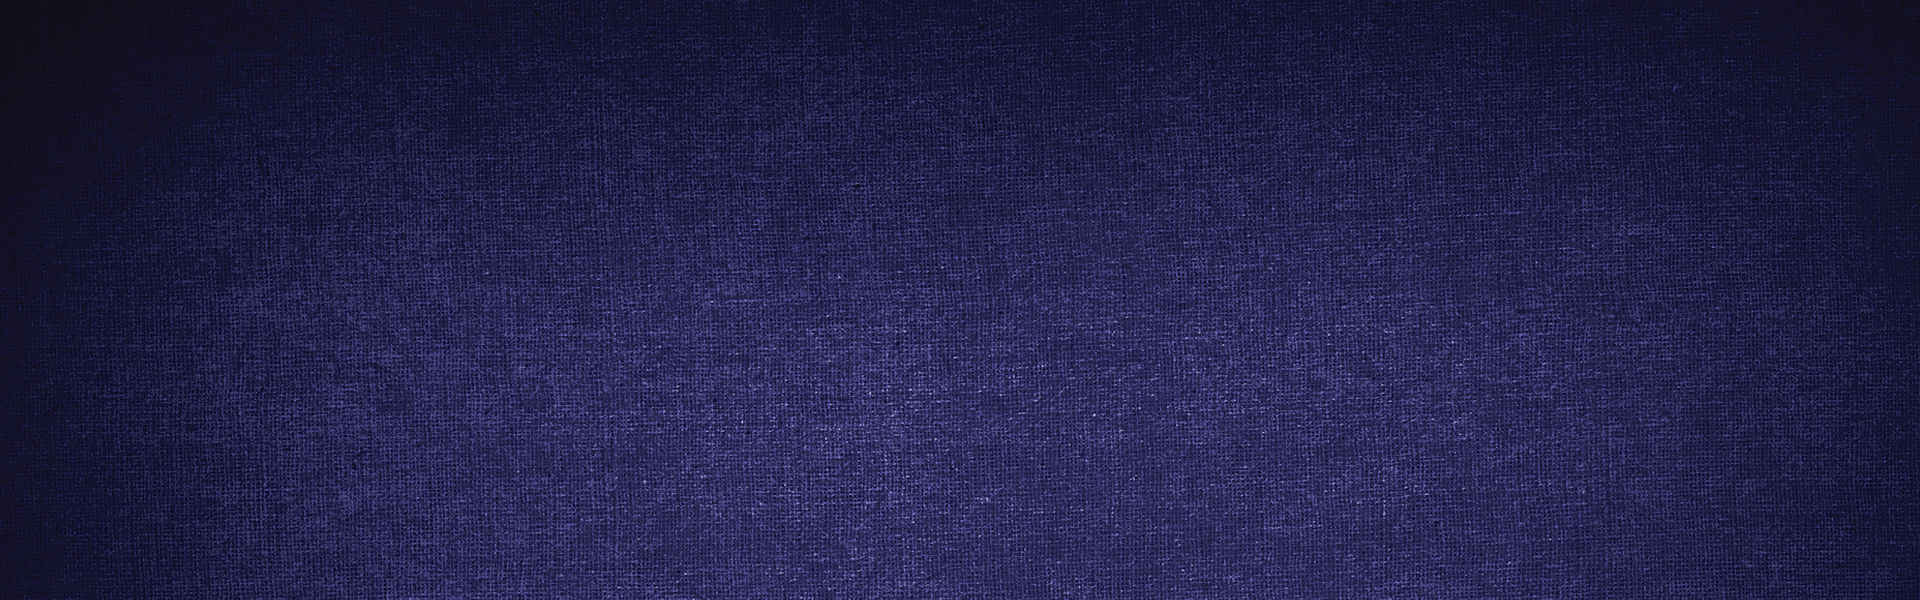 background purple